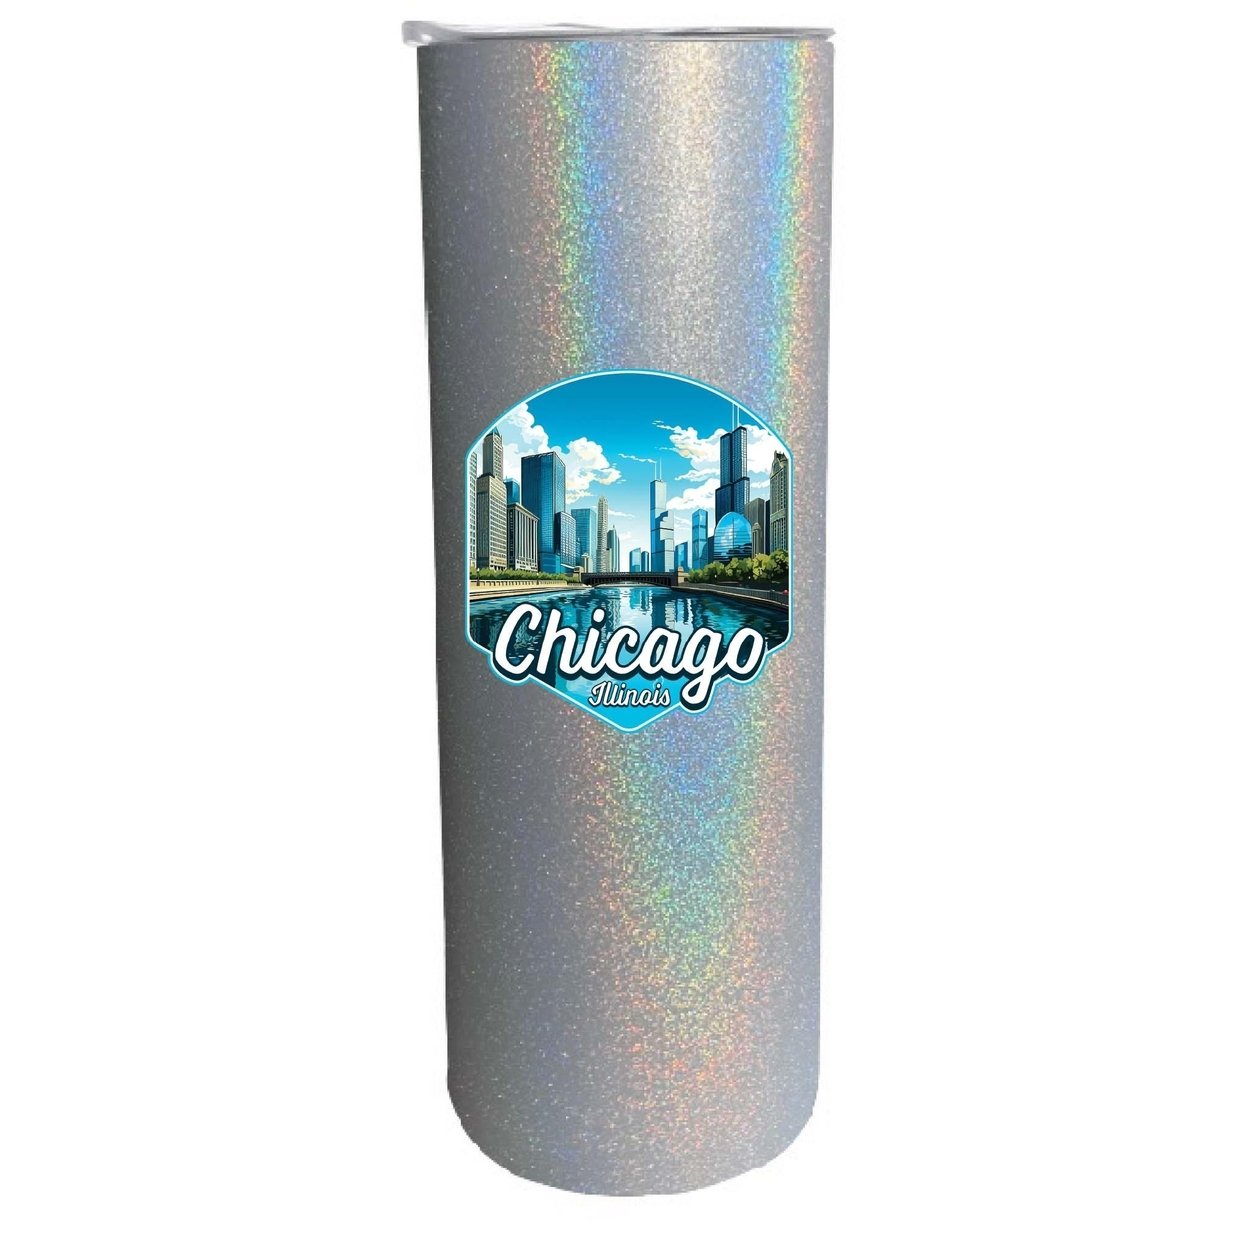 Chicago Illinois A Souvenir 20 Oz Insulated Skinny Tumbler - Gray Glitter,,4-Pack